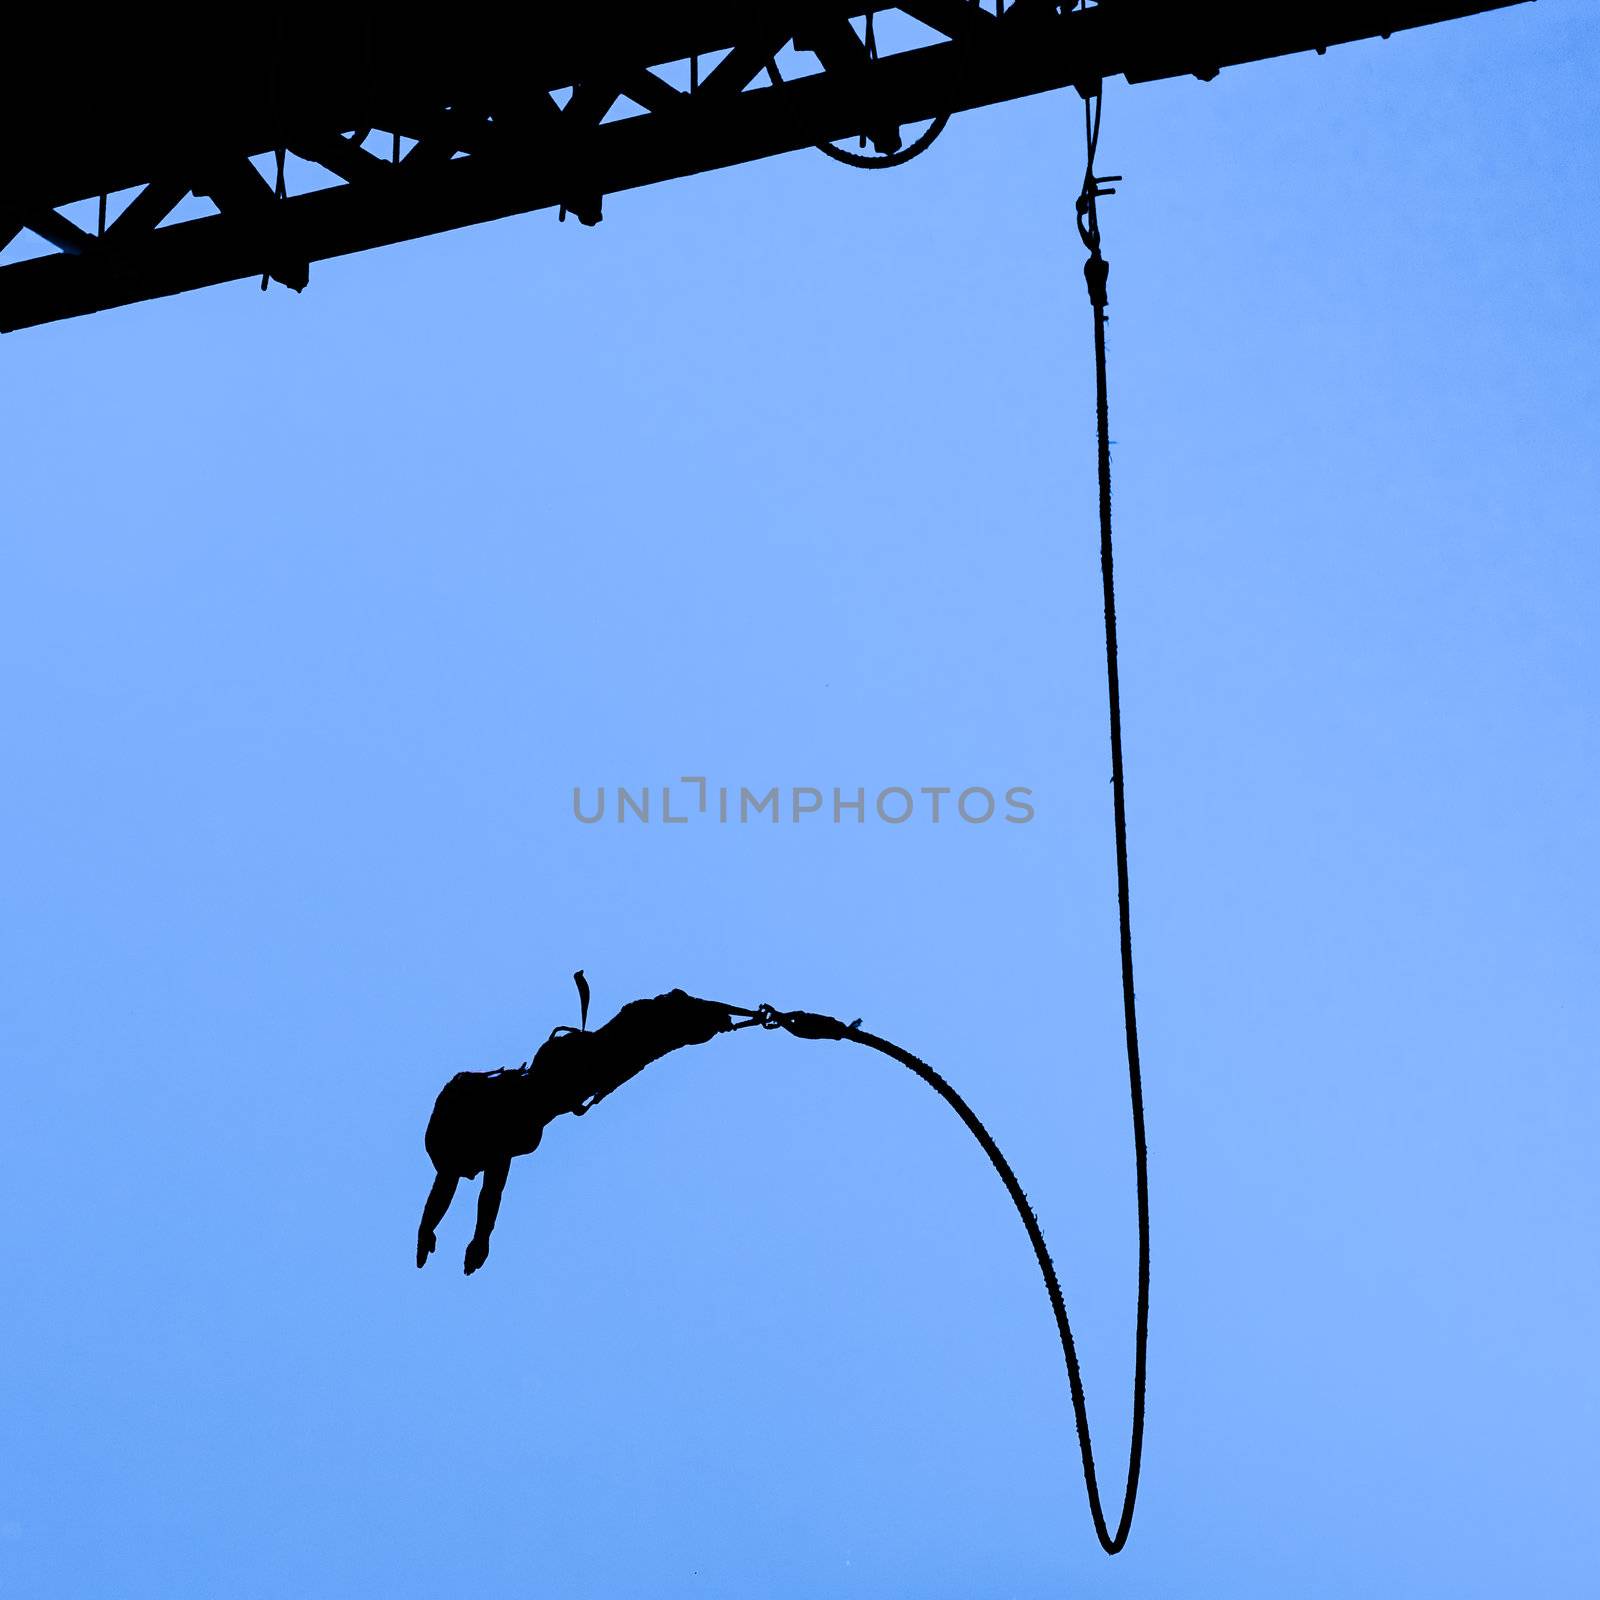 Bungee jumper against blue sky by PiLens